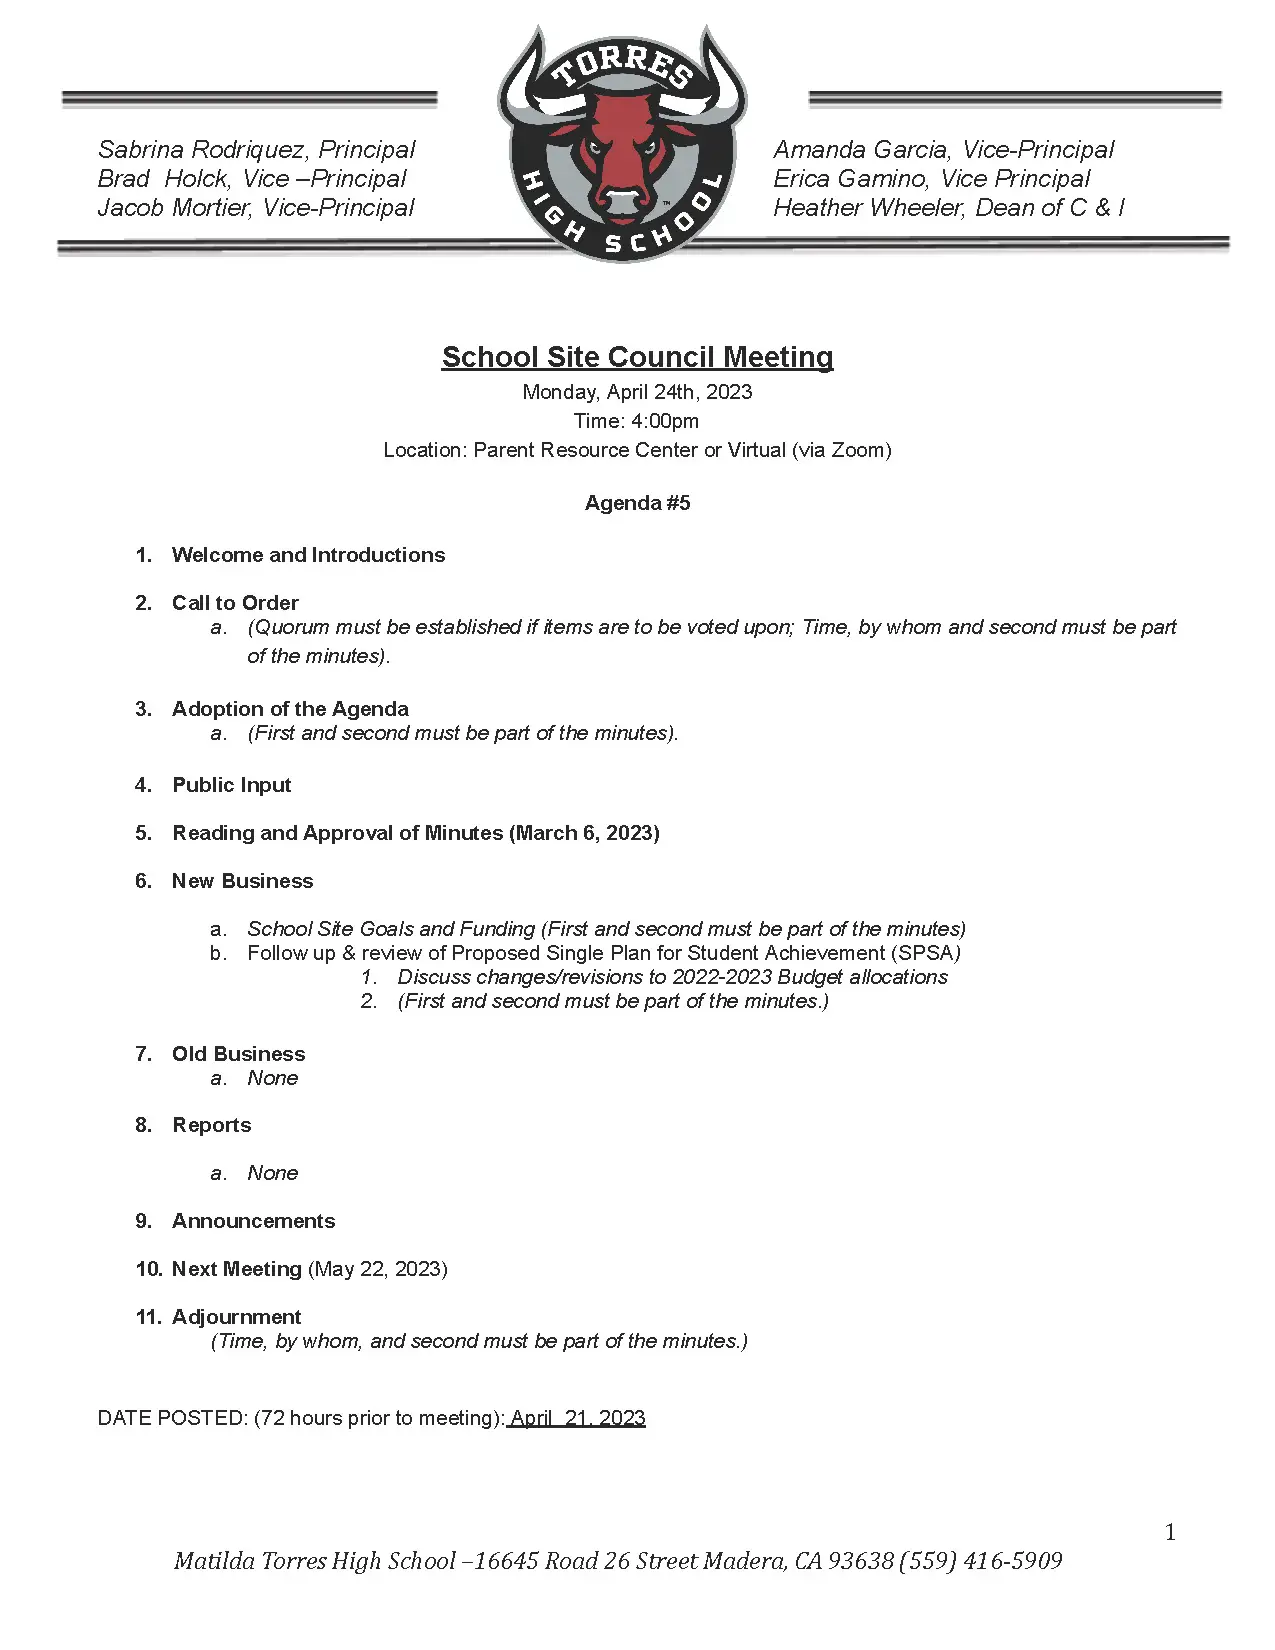 THS SSC Meeting Agenda #5 (English) 4-24-2023 Thumbnail